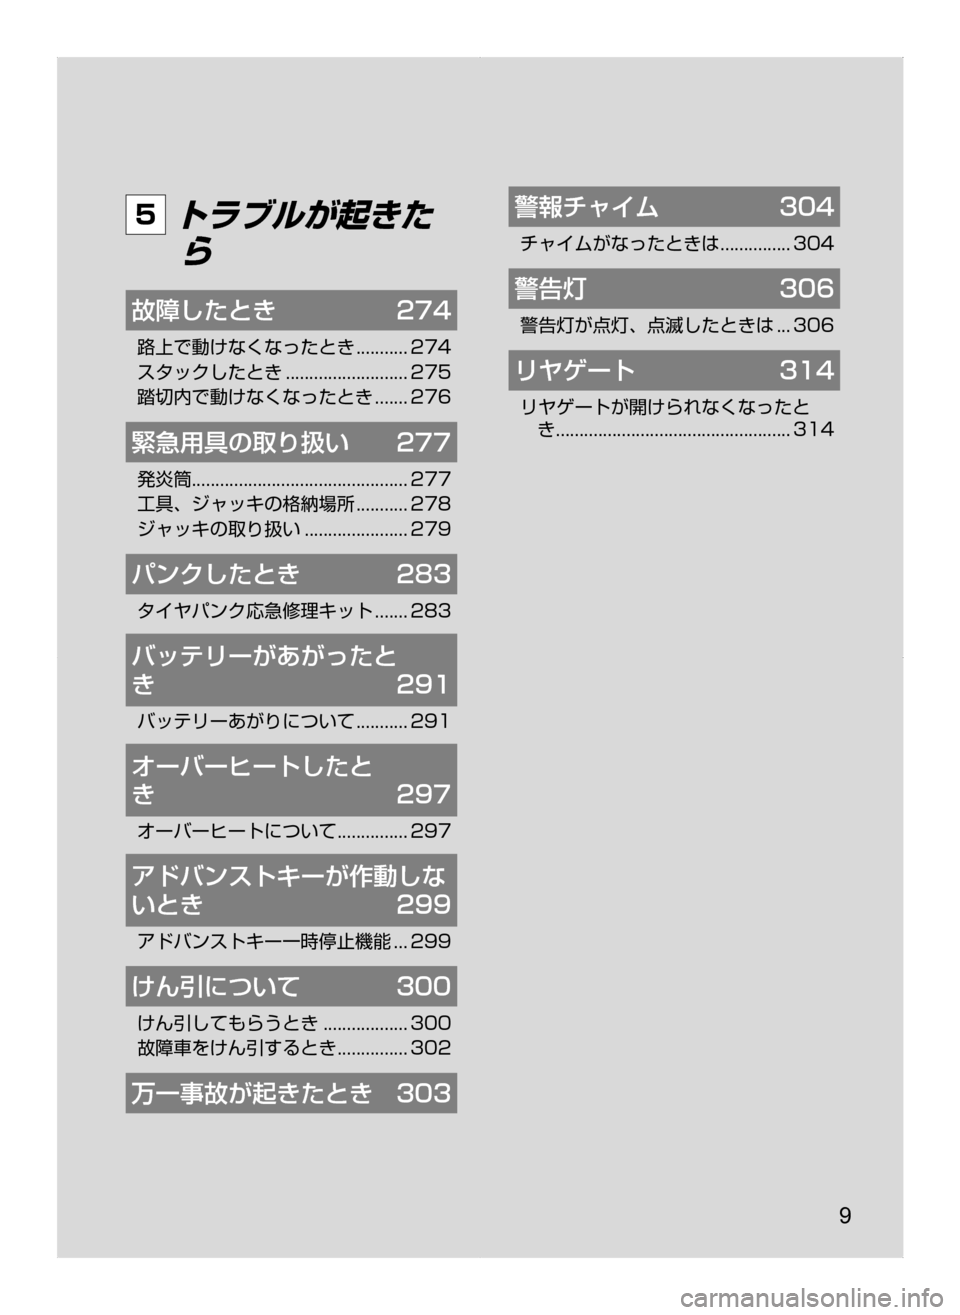 MAZDA MODEL BIANTE 2008  取扱説明書 (in Japanese) 9
5 トラブルが起きたら
故障したとき	 274
路上で動けなくなったとき...........274
スタックしたとき
..........................275
踏切内で動けなくなったと